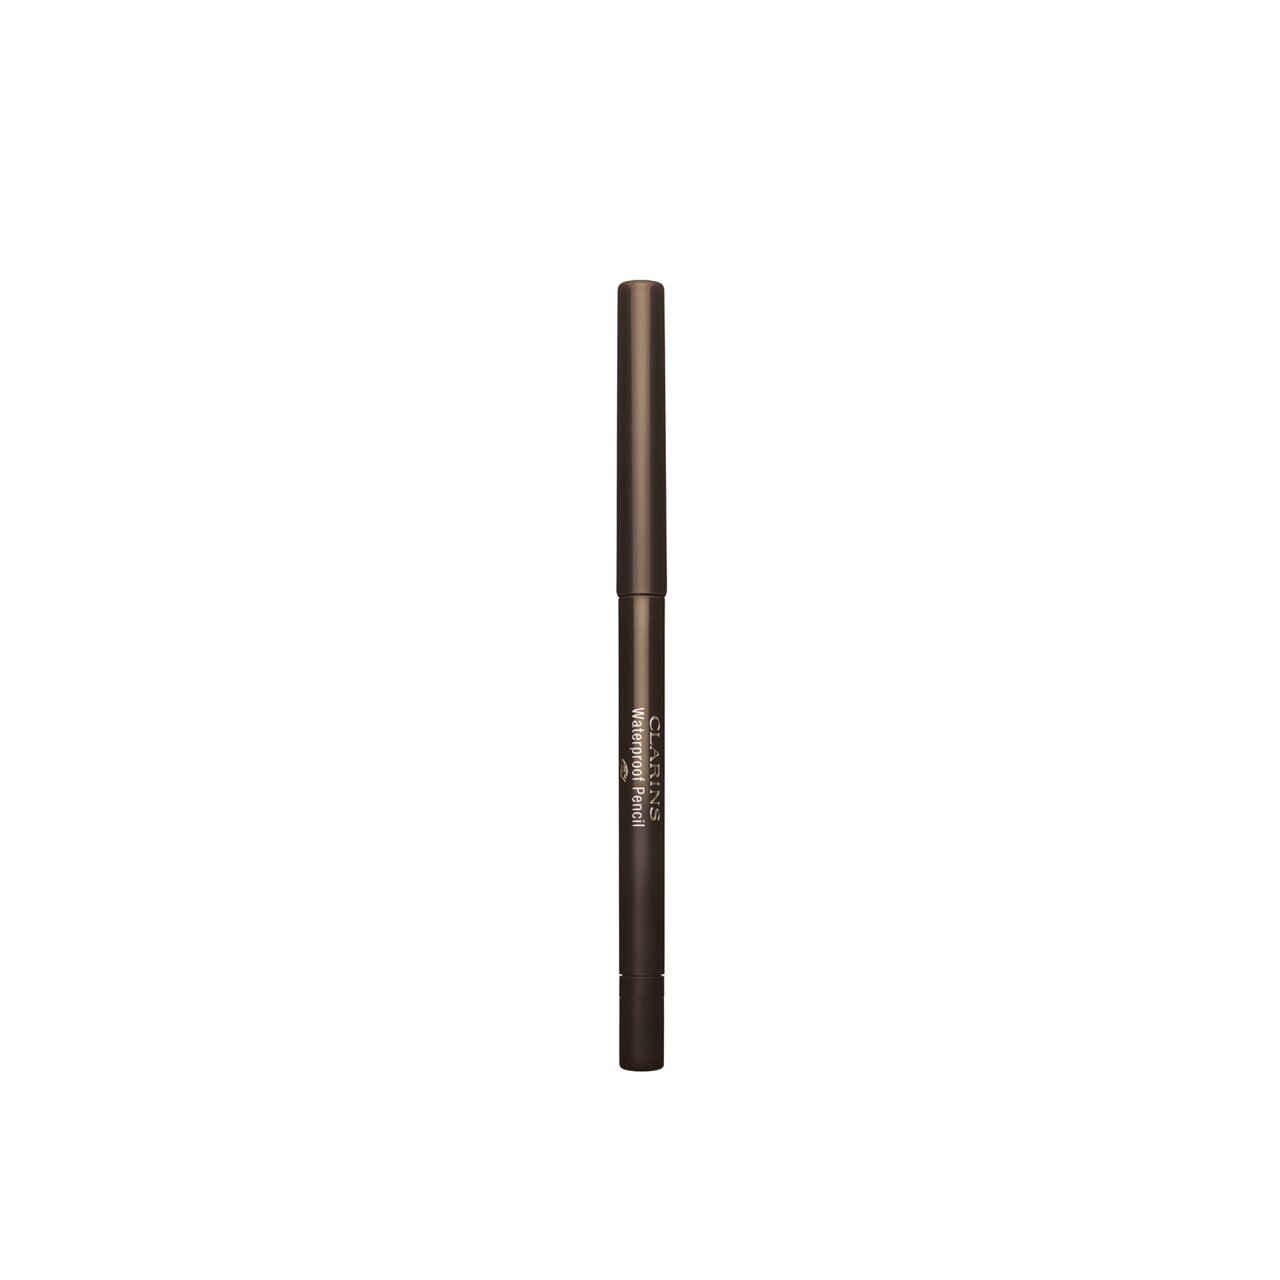 Clarins Waterproof Pencil Long-Lasting Eyeliner 02 Chestnut 0.29g (0.01 oz)